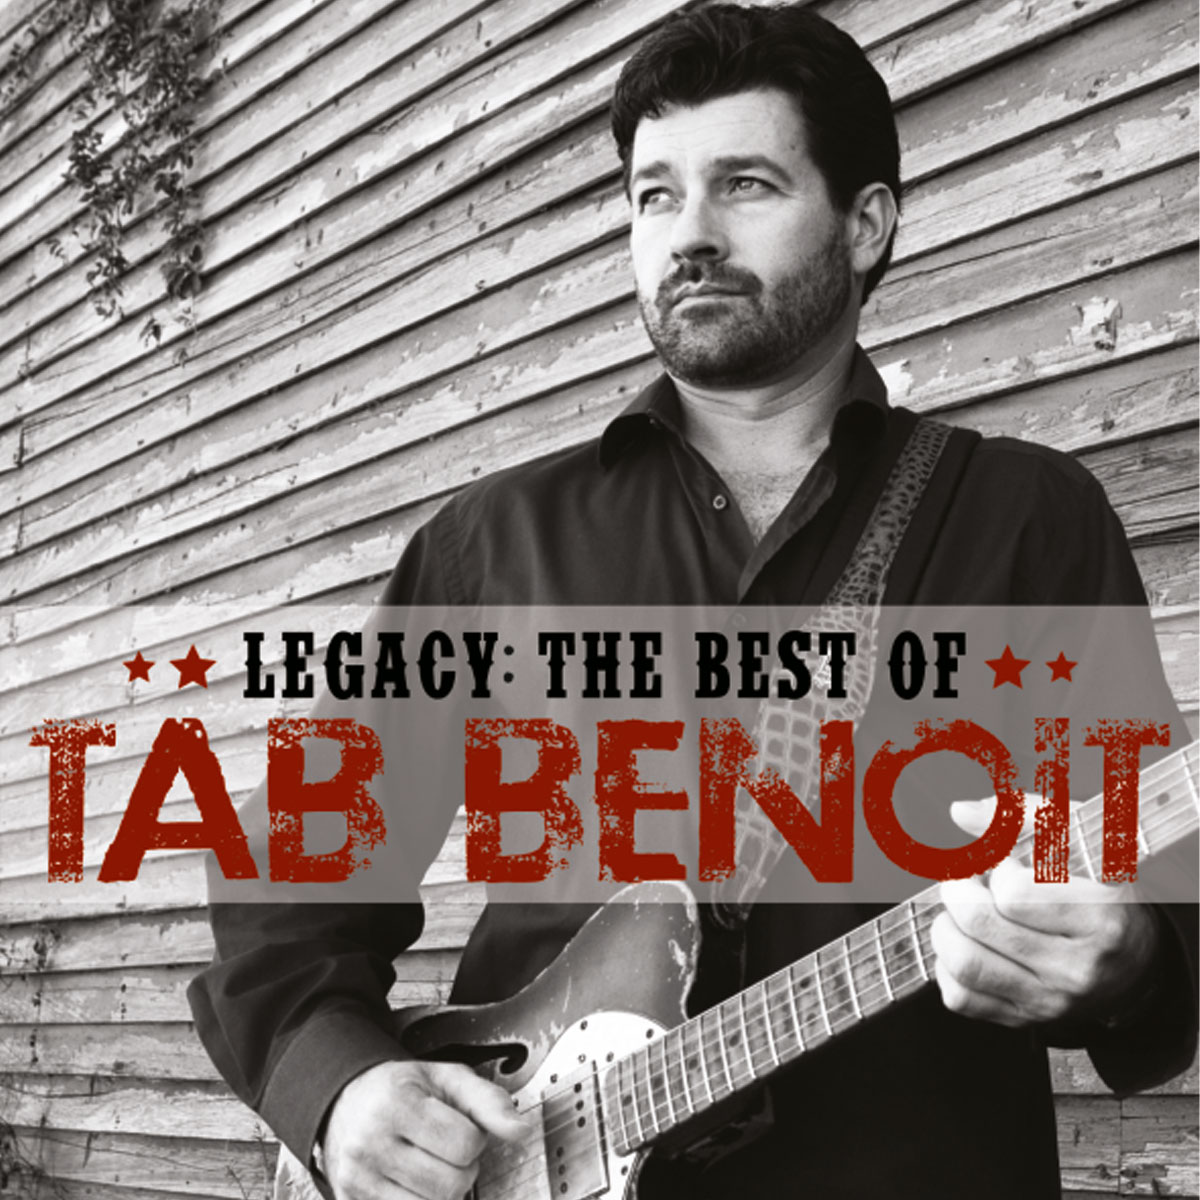 The Best of Tab Benoit